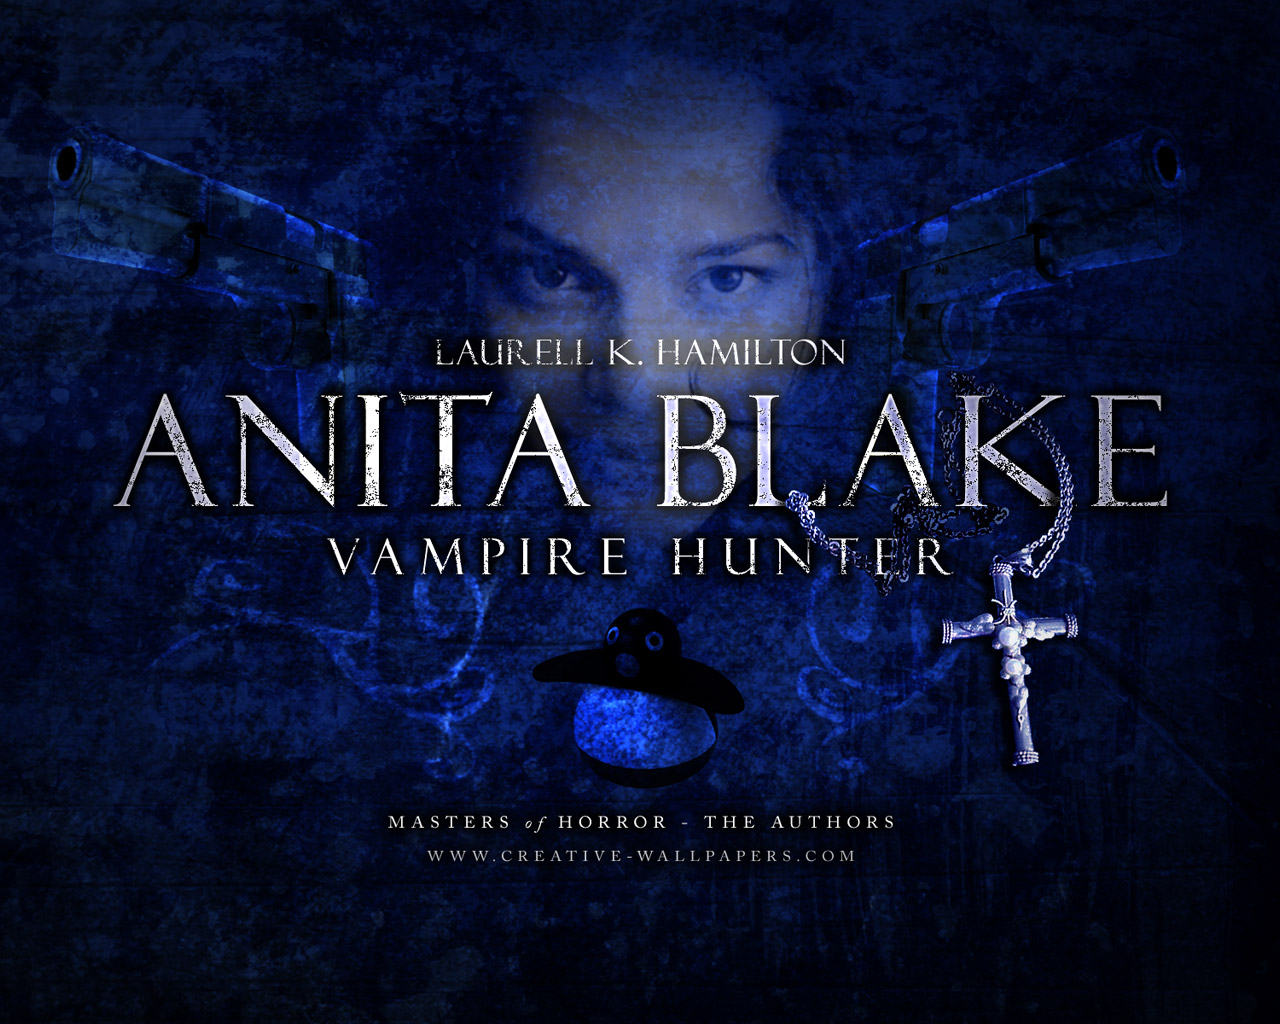 Anita Blake: Vampire Hunter #5